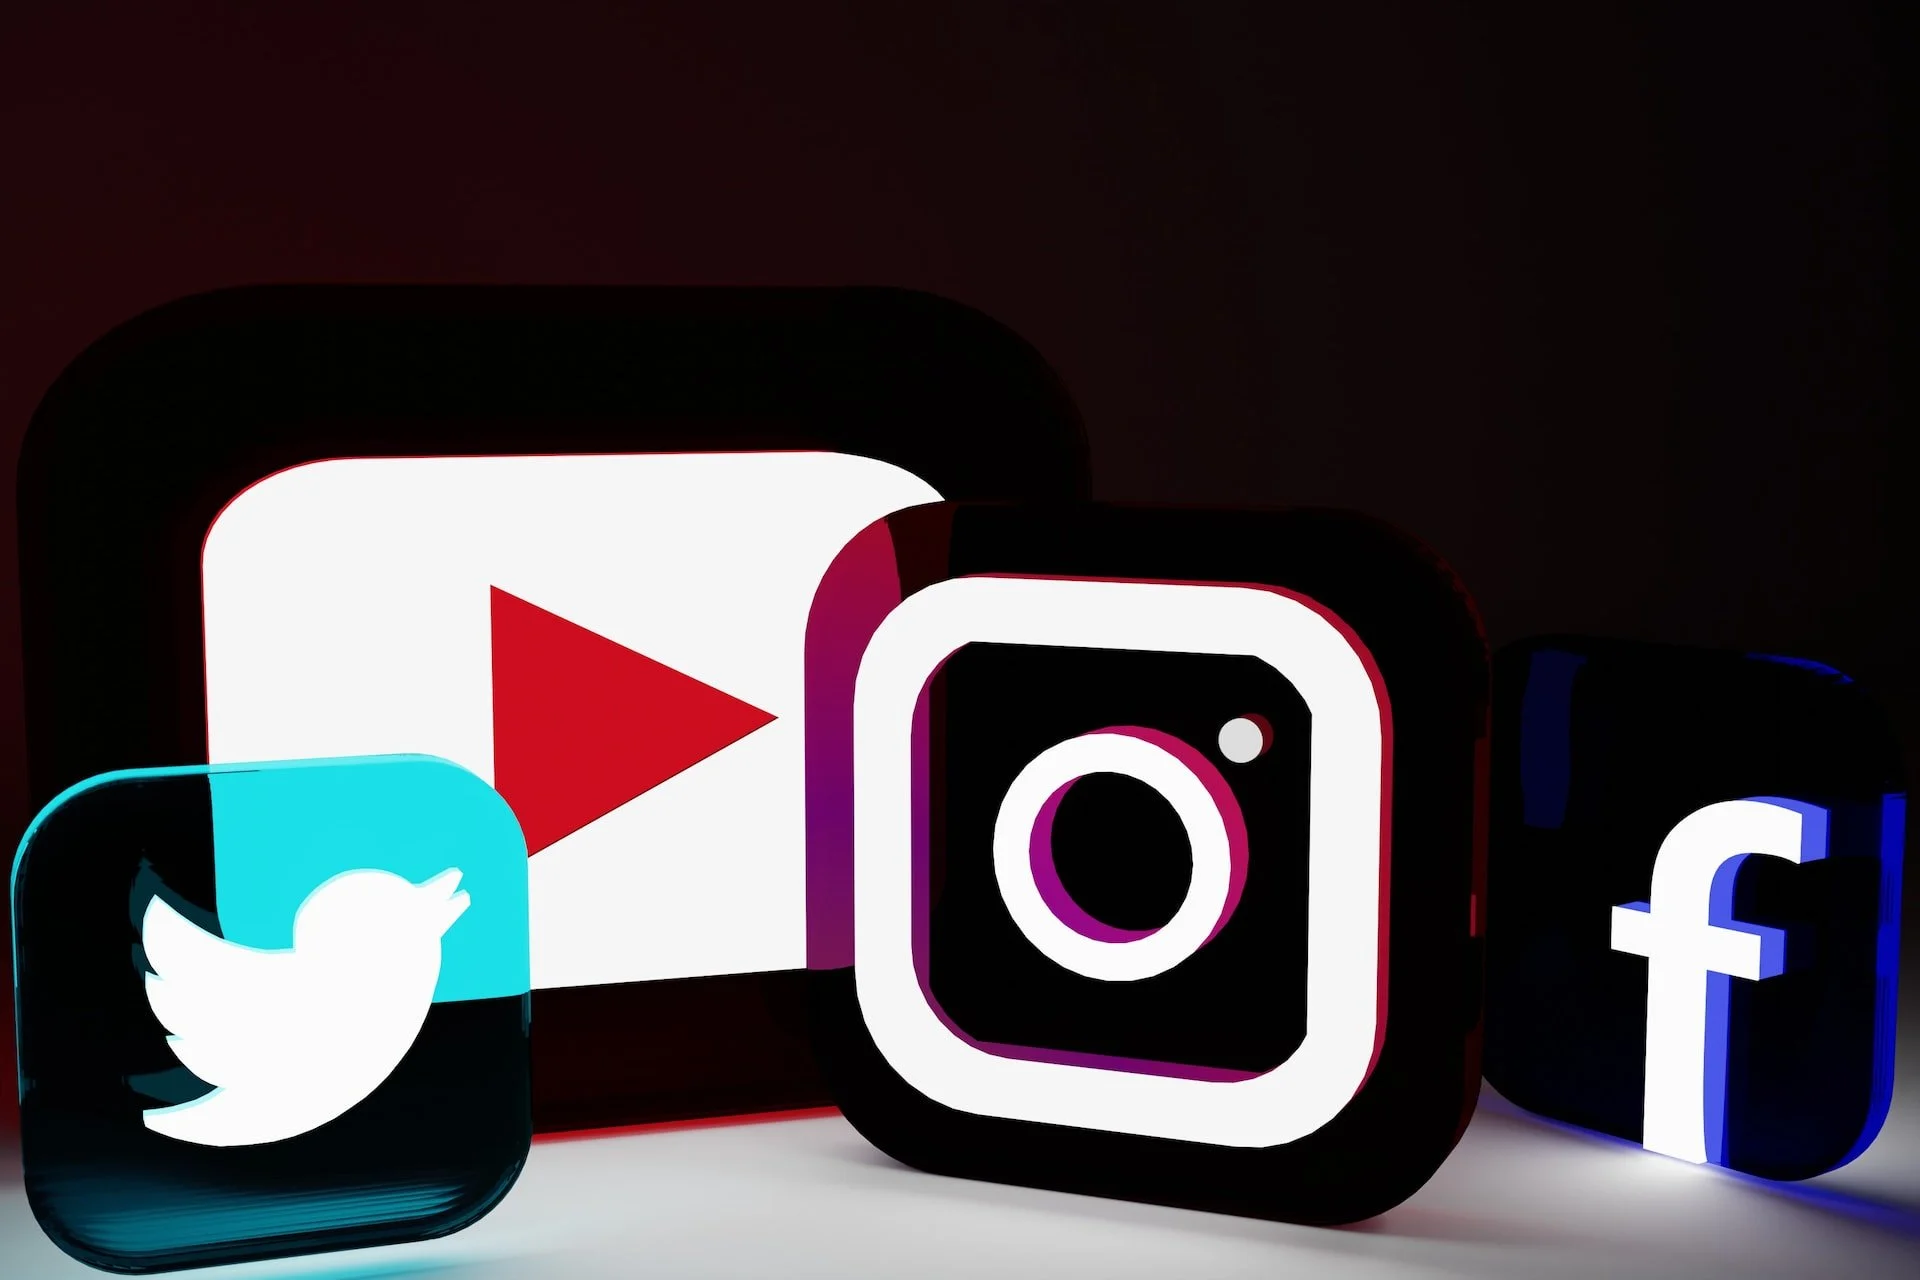 plataformas de mídia social Twitter, YouTube, Instagram e logotipos transparentes e iluminados por neon do Facebook